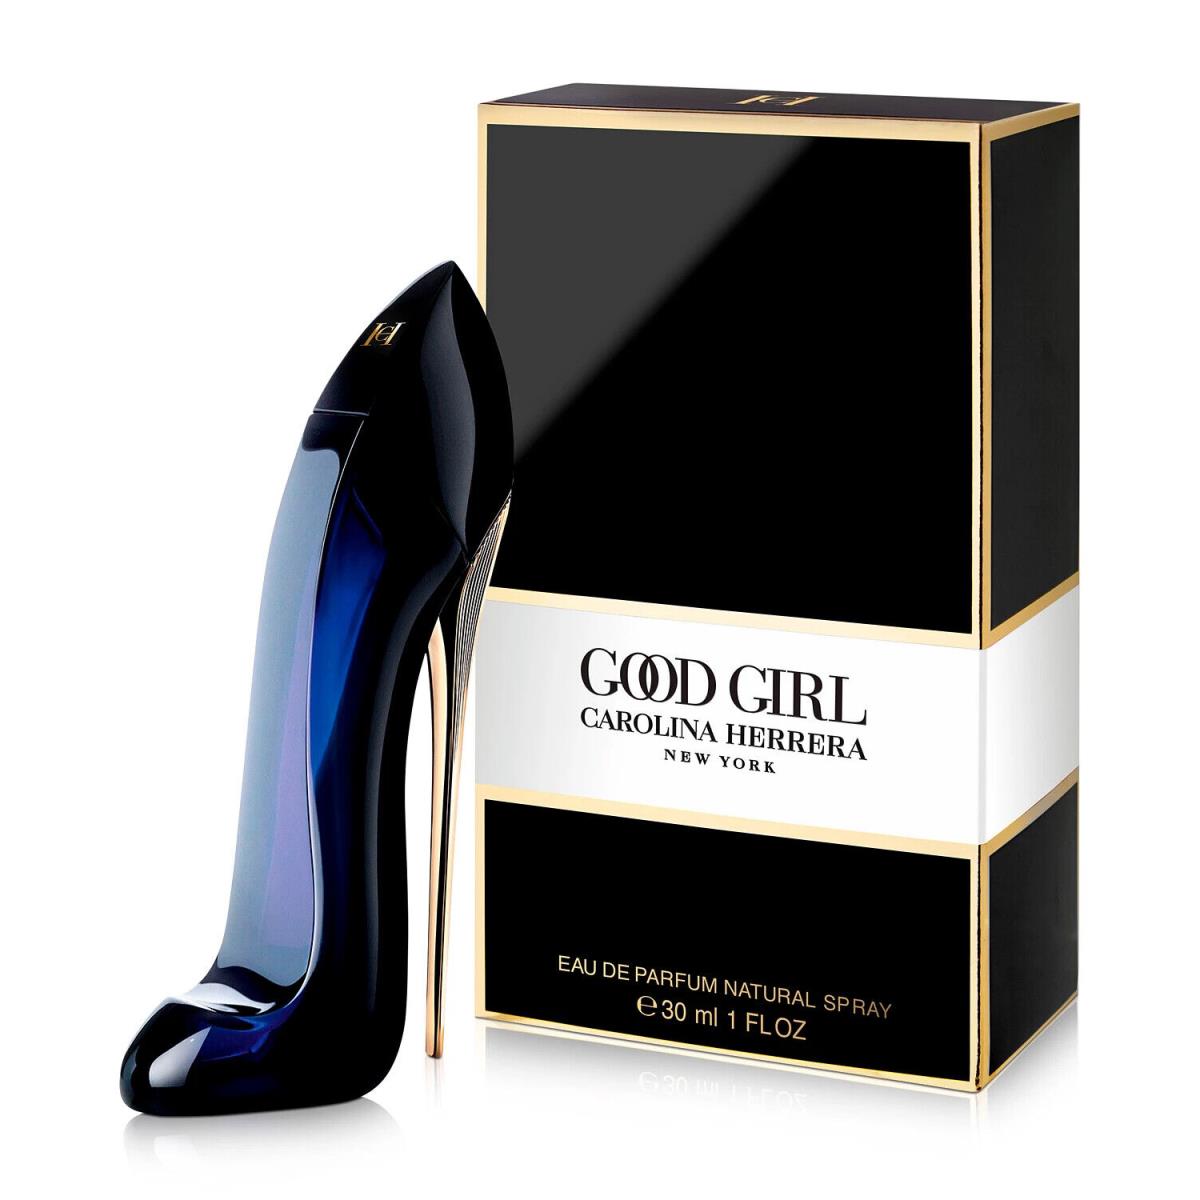 Good Girl Perfume by Carolina Herrera 1.0 oz Eau de Parfum Spray. Box